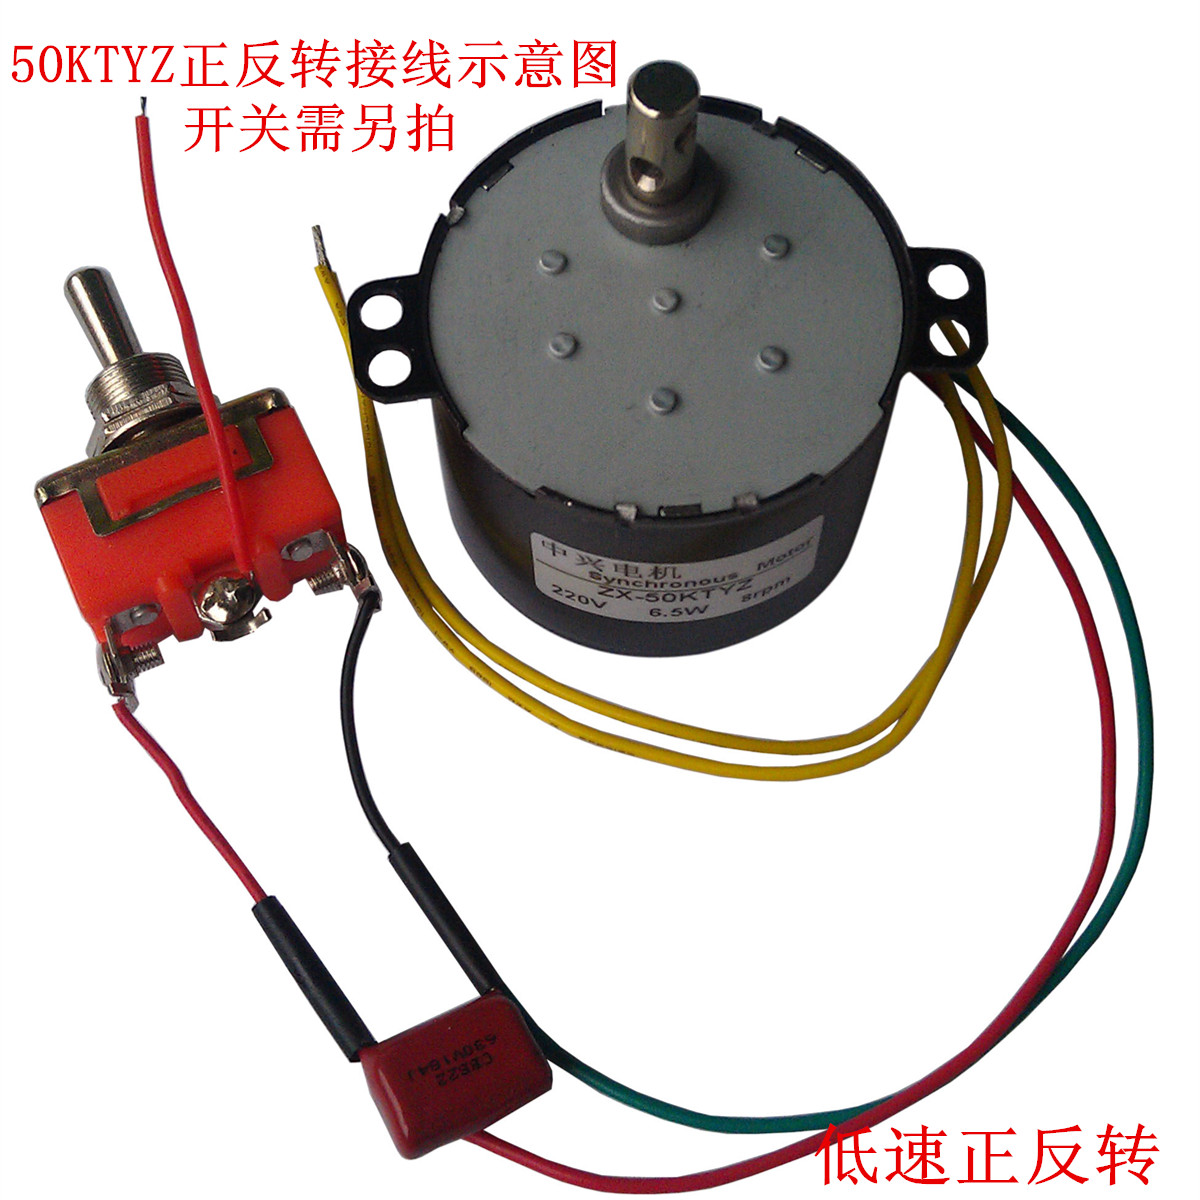 50KTYZ正反转可控同步电机 220V6.5W微型低速减速电机 静音电机